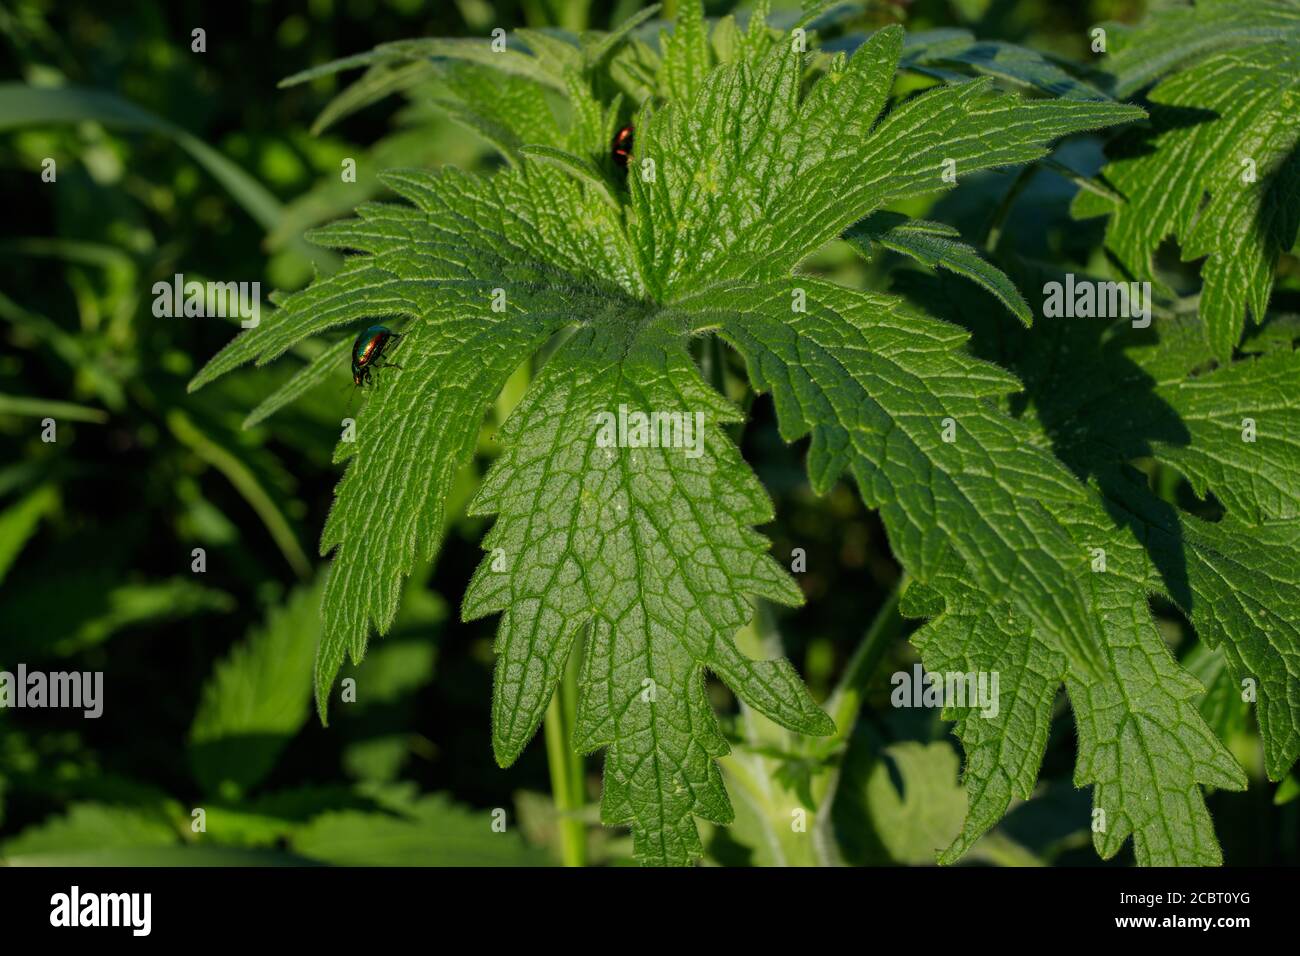 Young wild marijuana plants, illuminated by sunlight. View from above Stock Photo